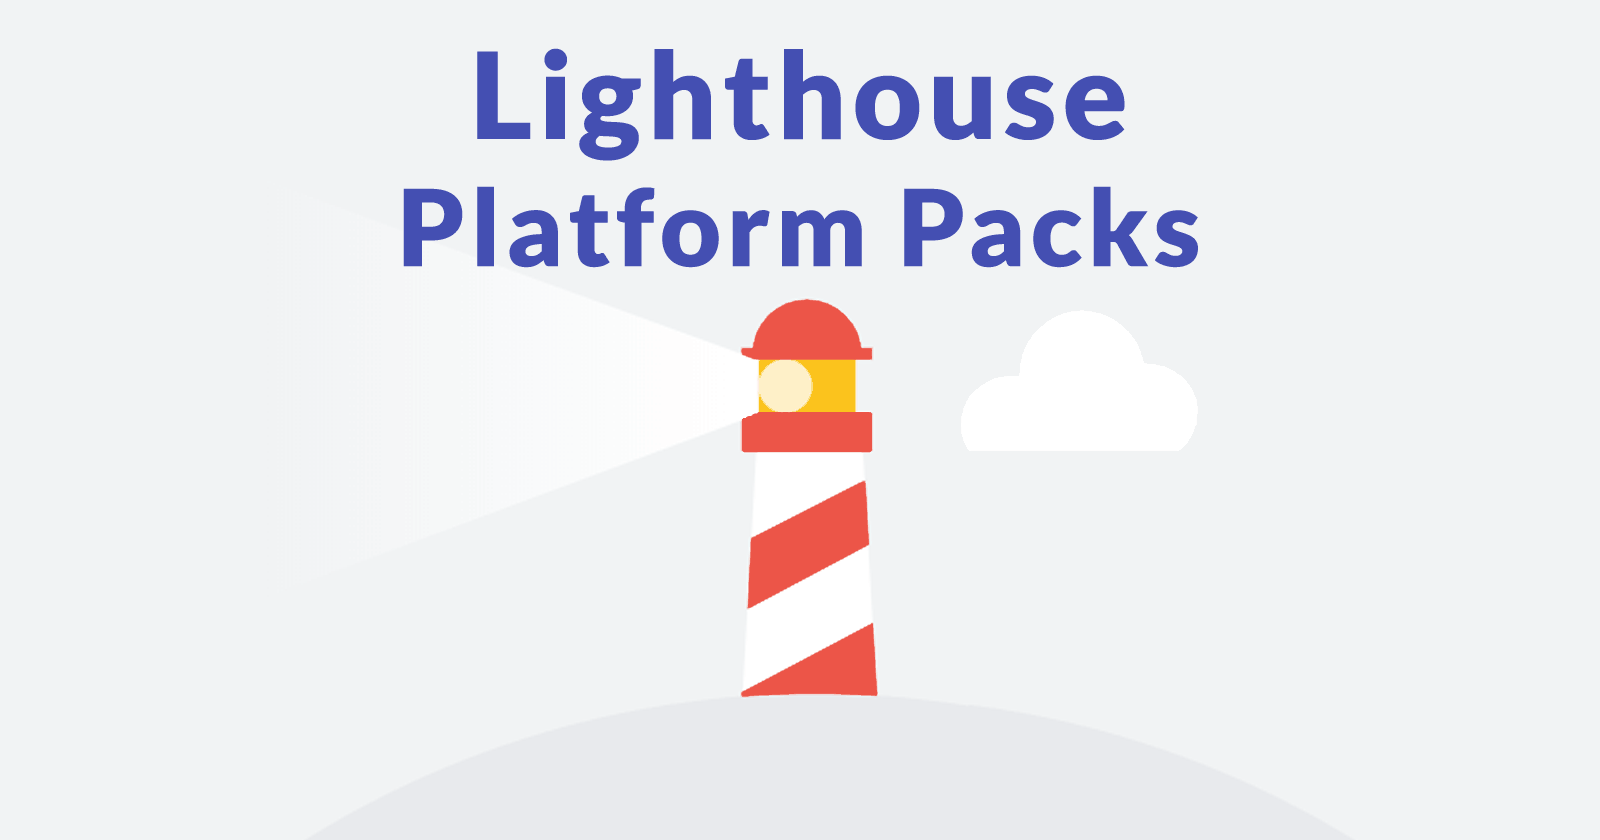 image of Chrome Lighthouse lighthouse image with words Chrome Lighthouse Platform Packs superimposed